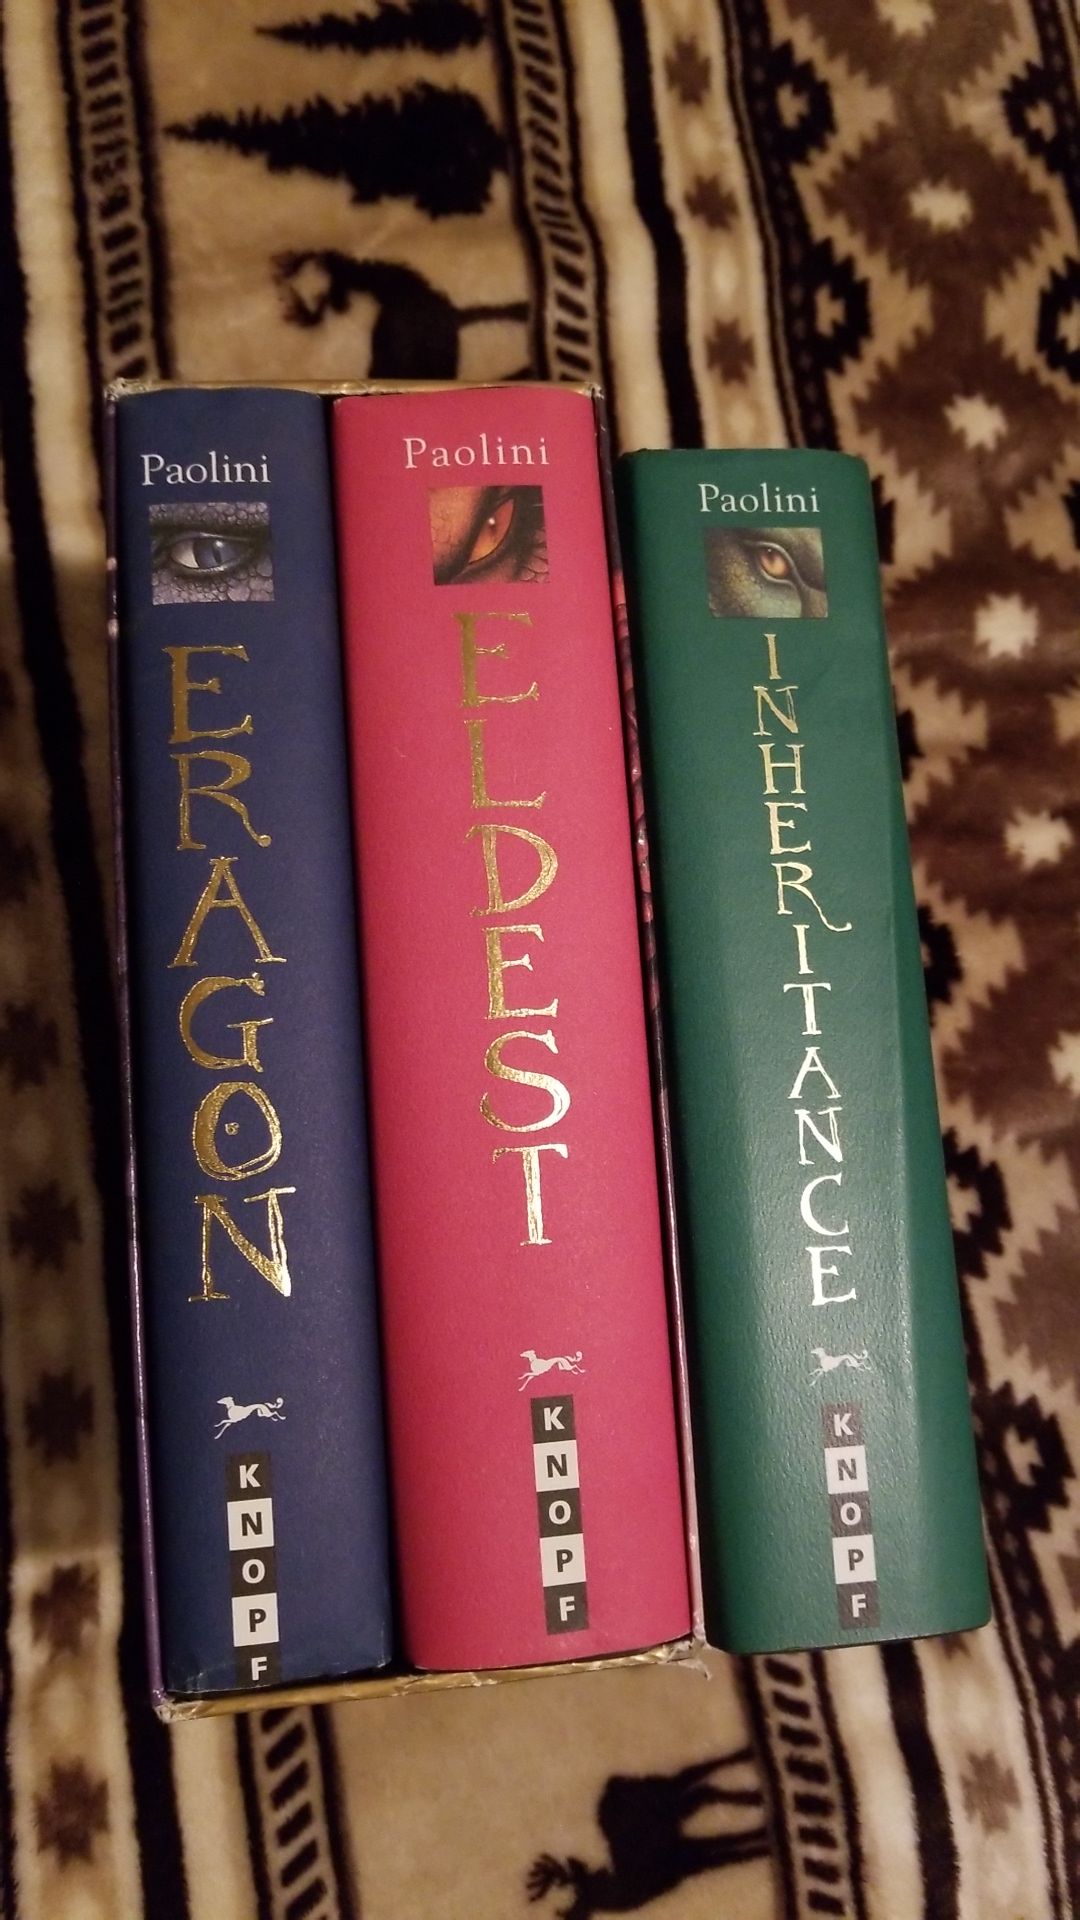 Eragon book series